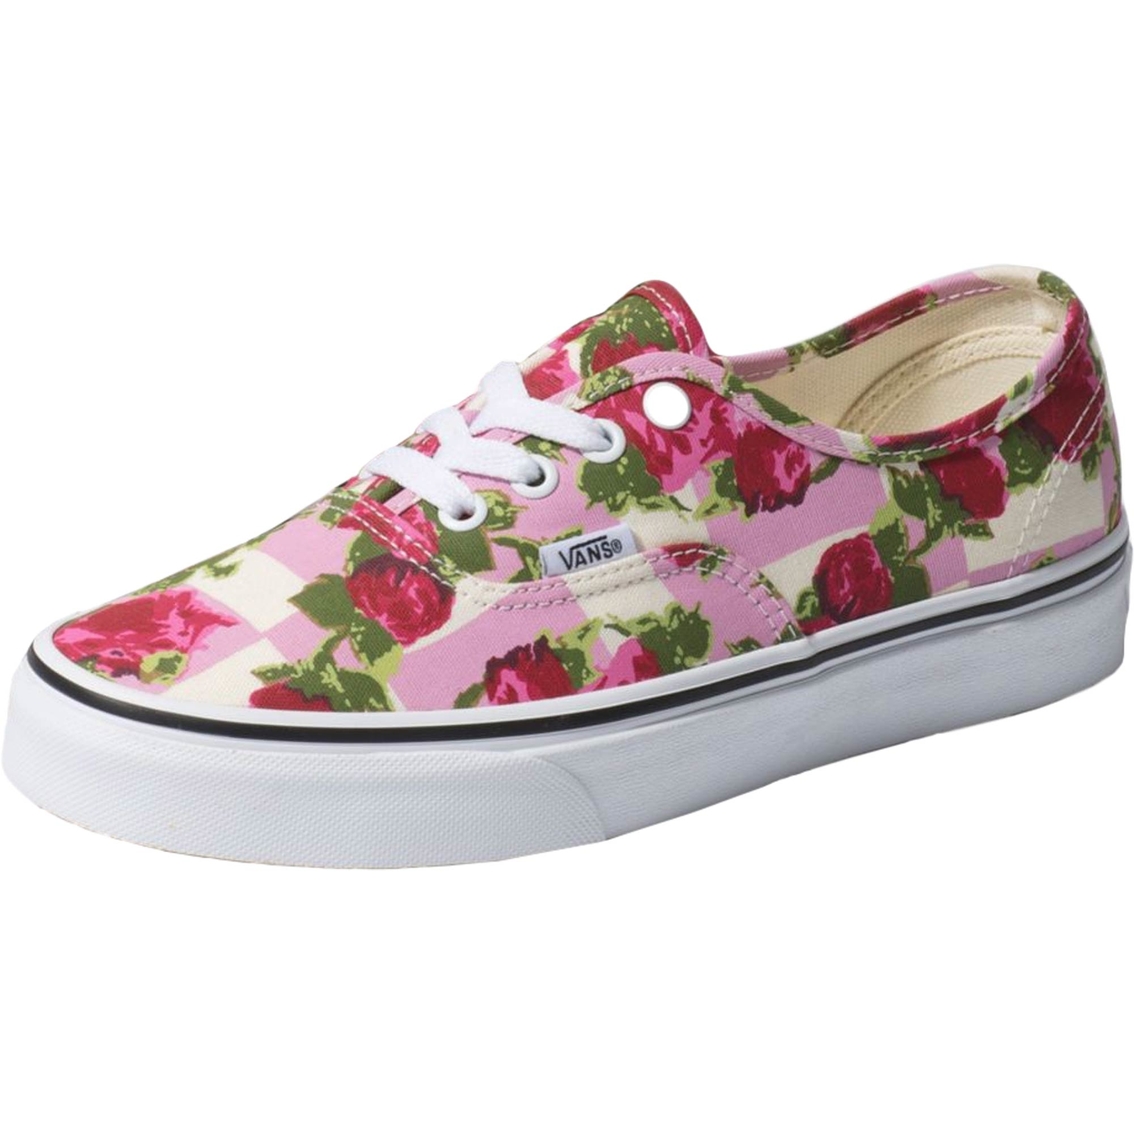 Vans Women's Authentic Floral Sneakers | Sneakers & Lifestyle | Shop ...